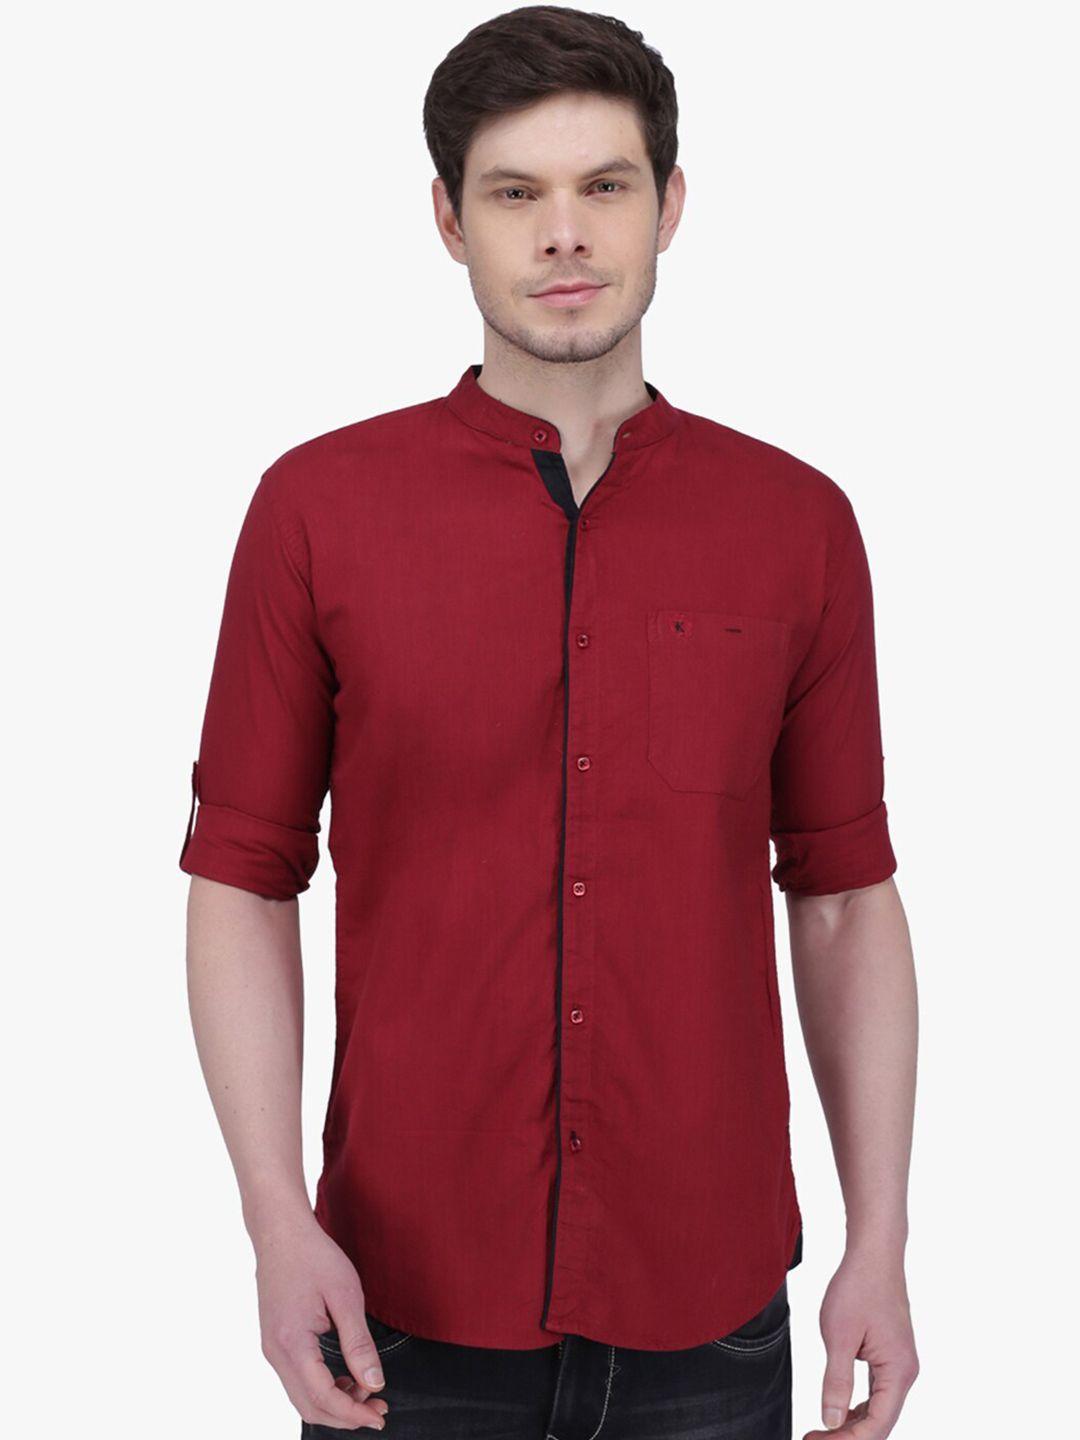 kuons avenue smart slim fit casual shirt